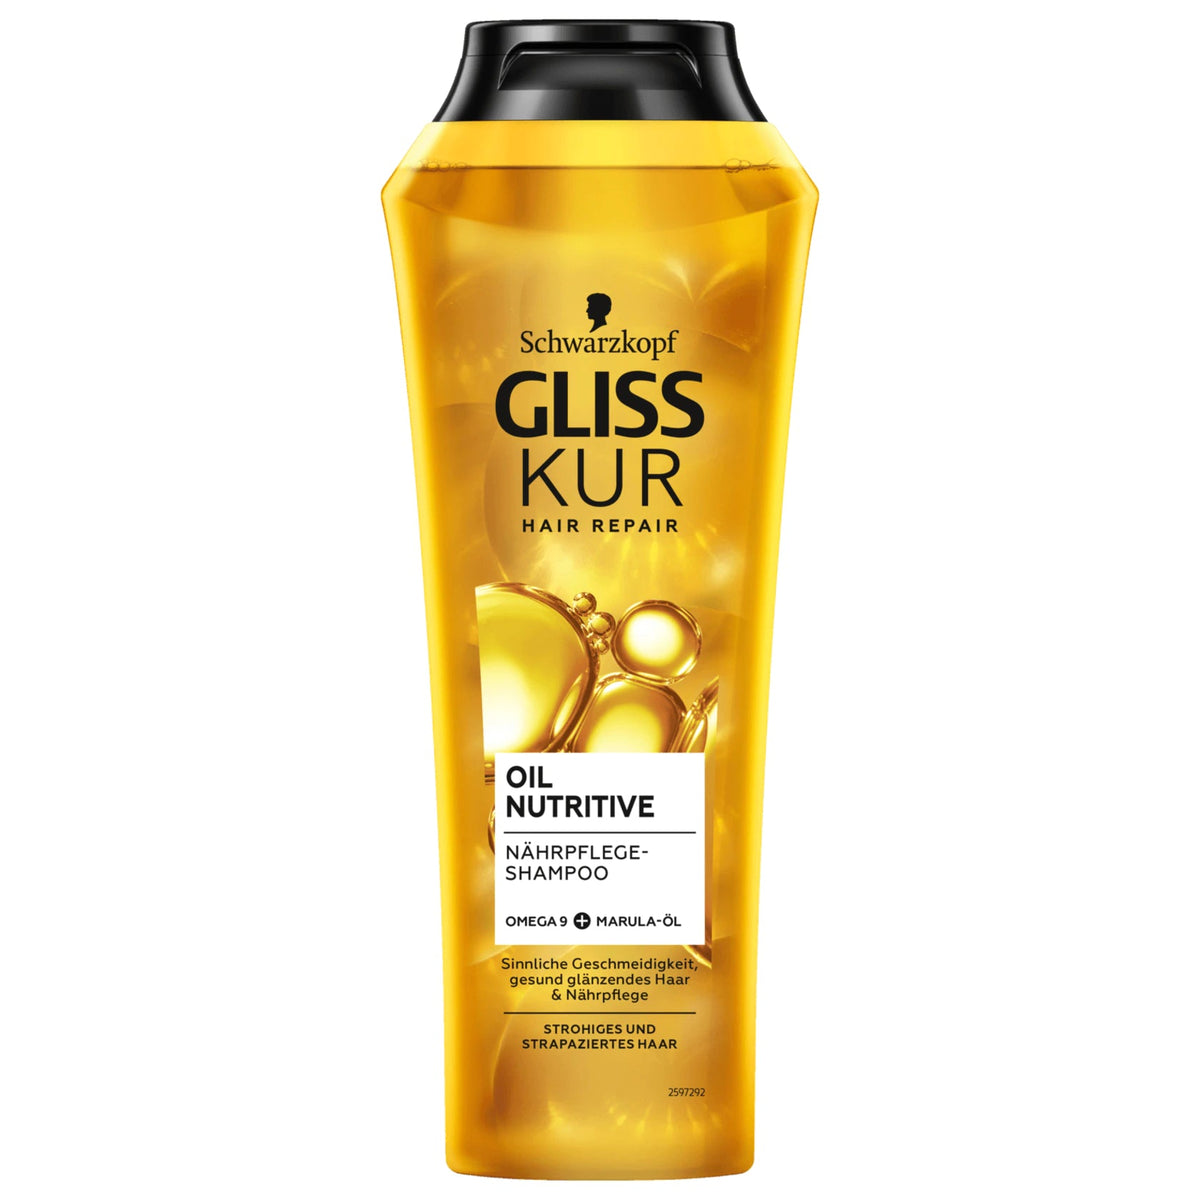 Schwarzkopf Gliss Kur Shampoo Oil Nutritive 250ml - küblerGo